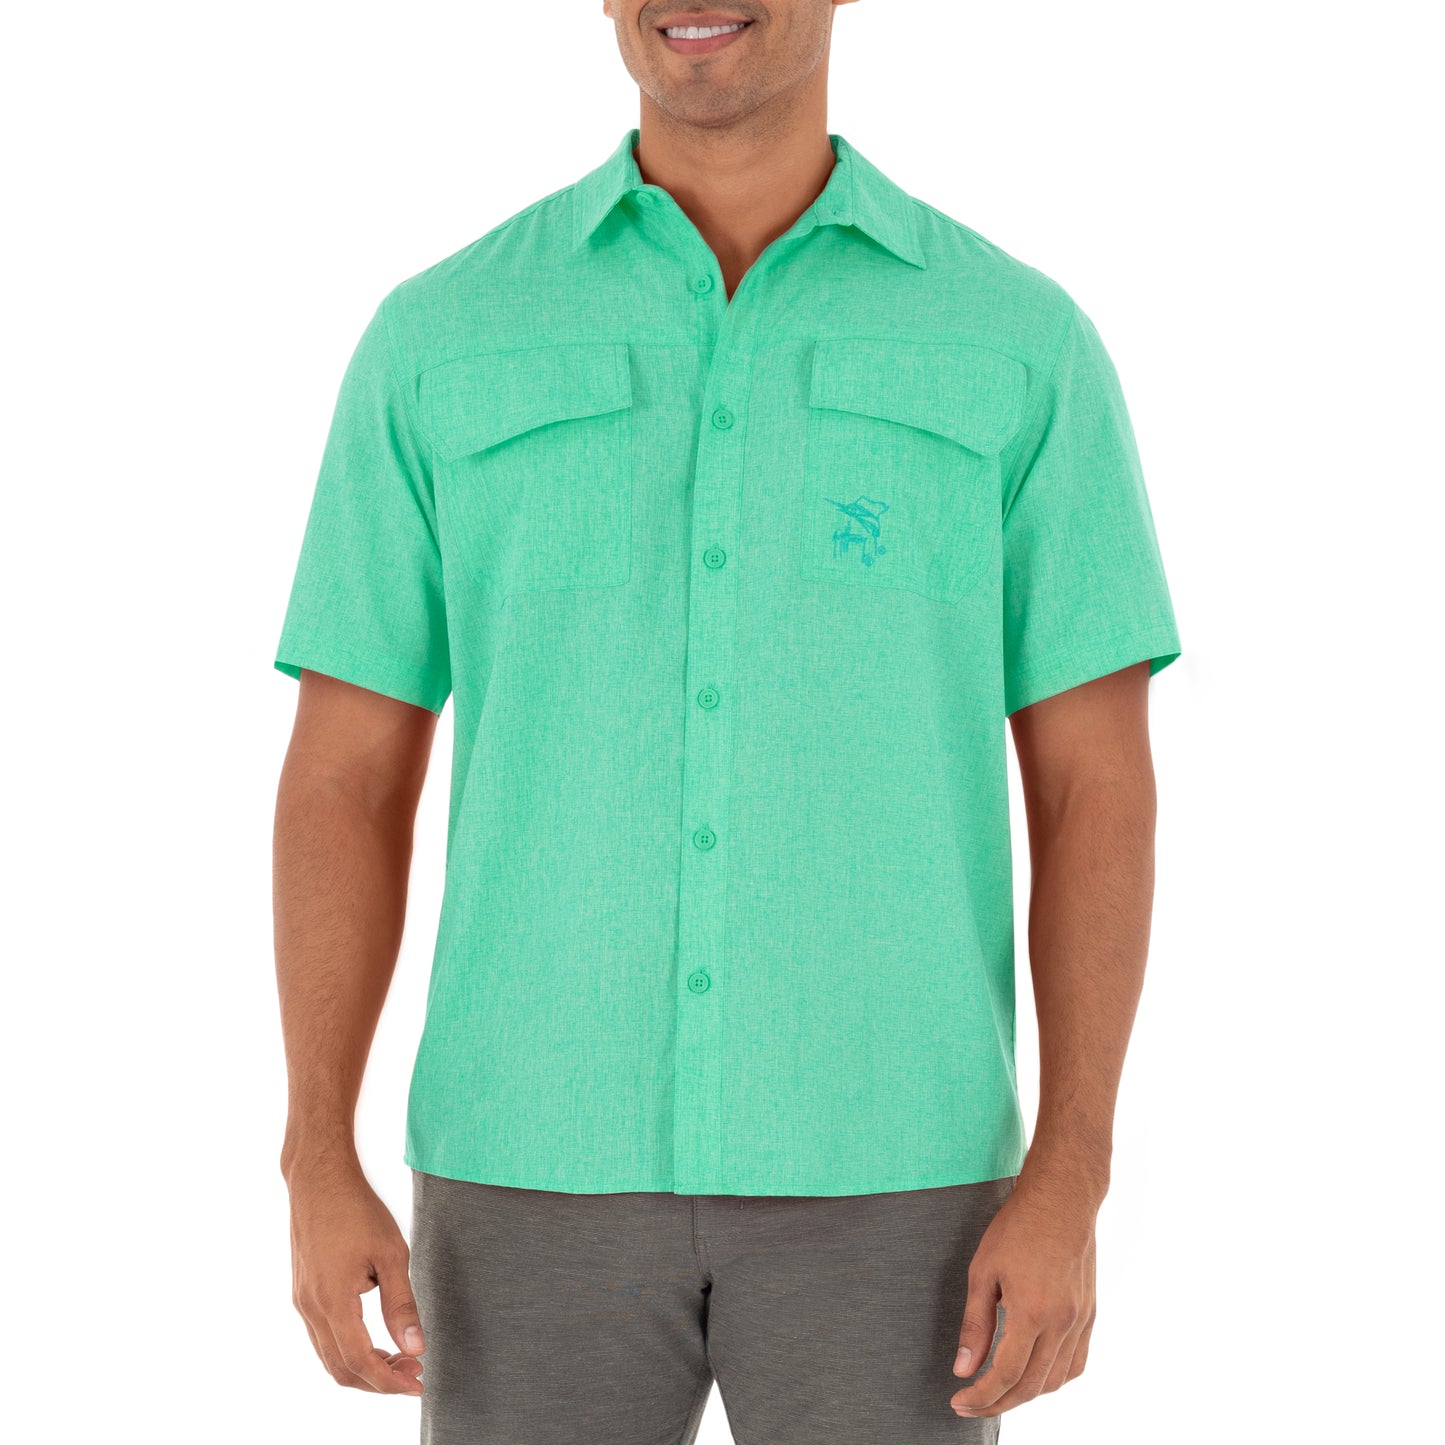 Men's Short Sleeve Heather Textured Cationic Green Fishing Shirt View 1